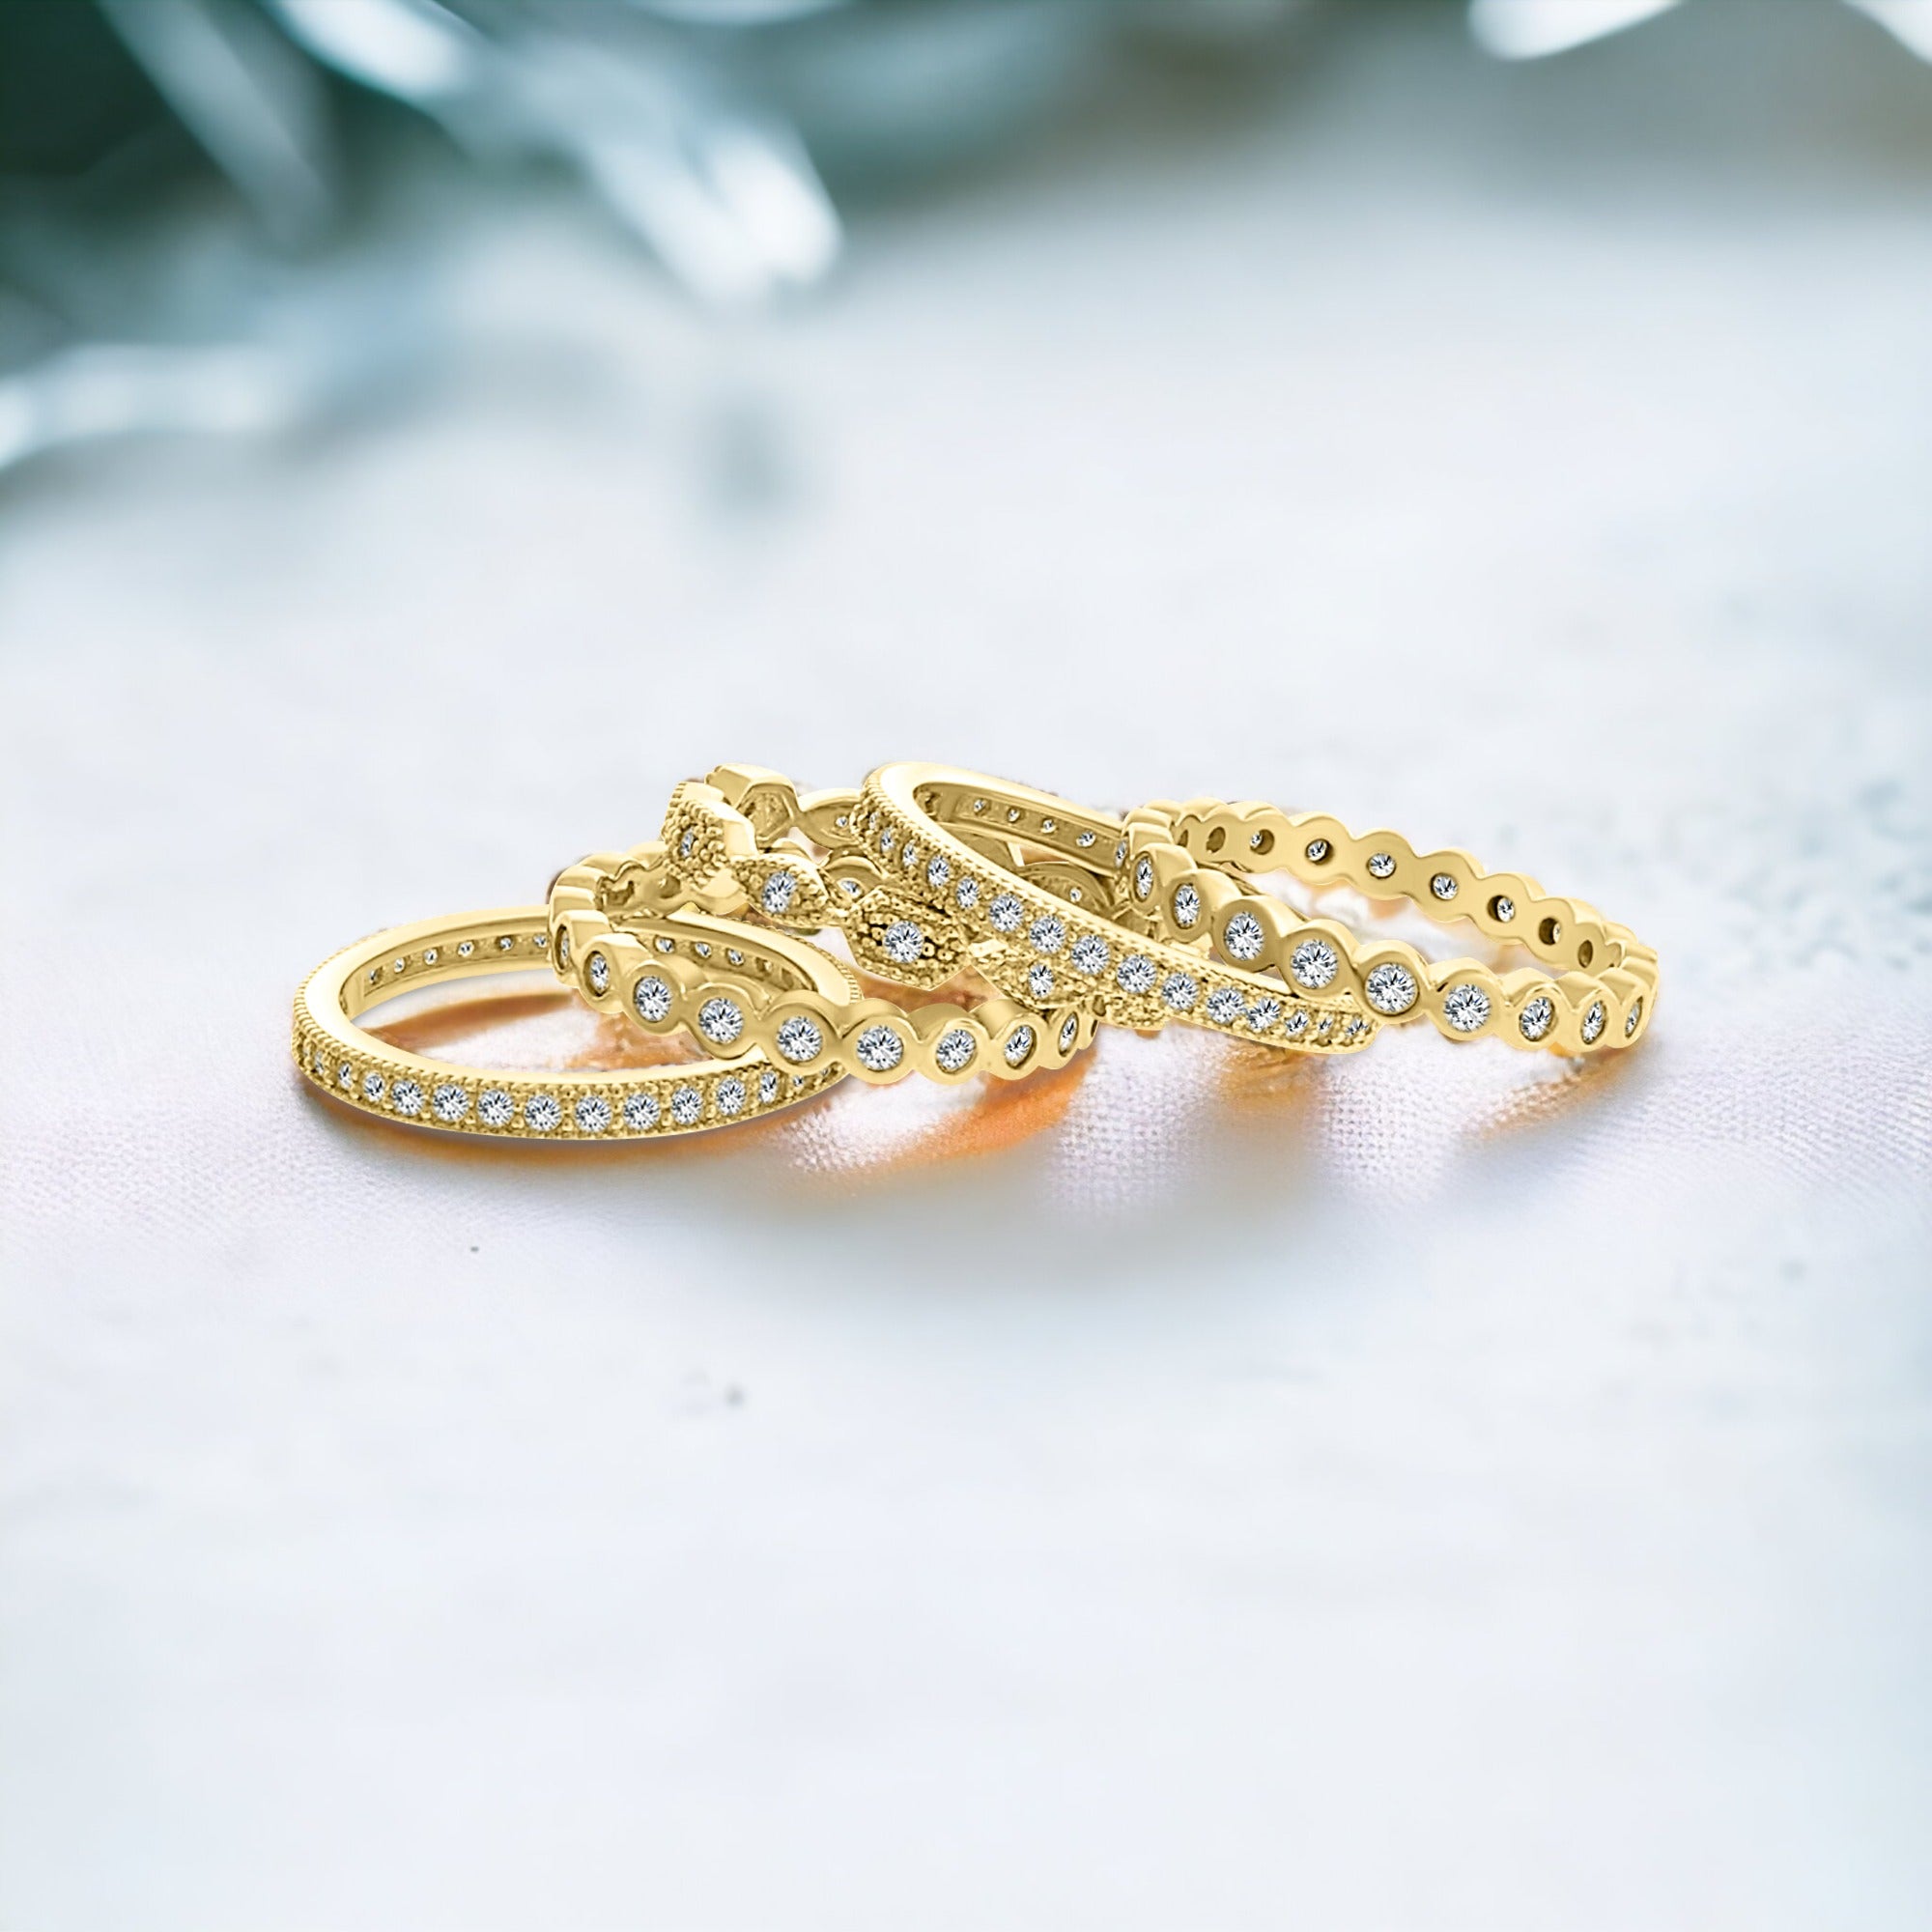 Wholesales silver ring women gold rings| Alibaba.com